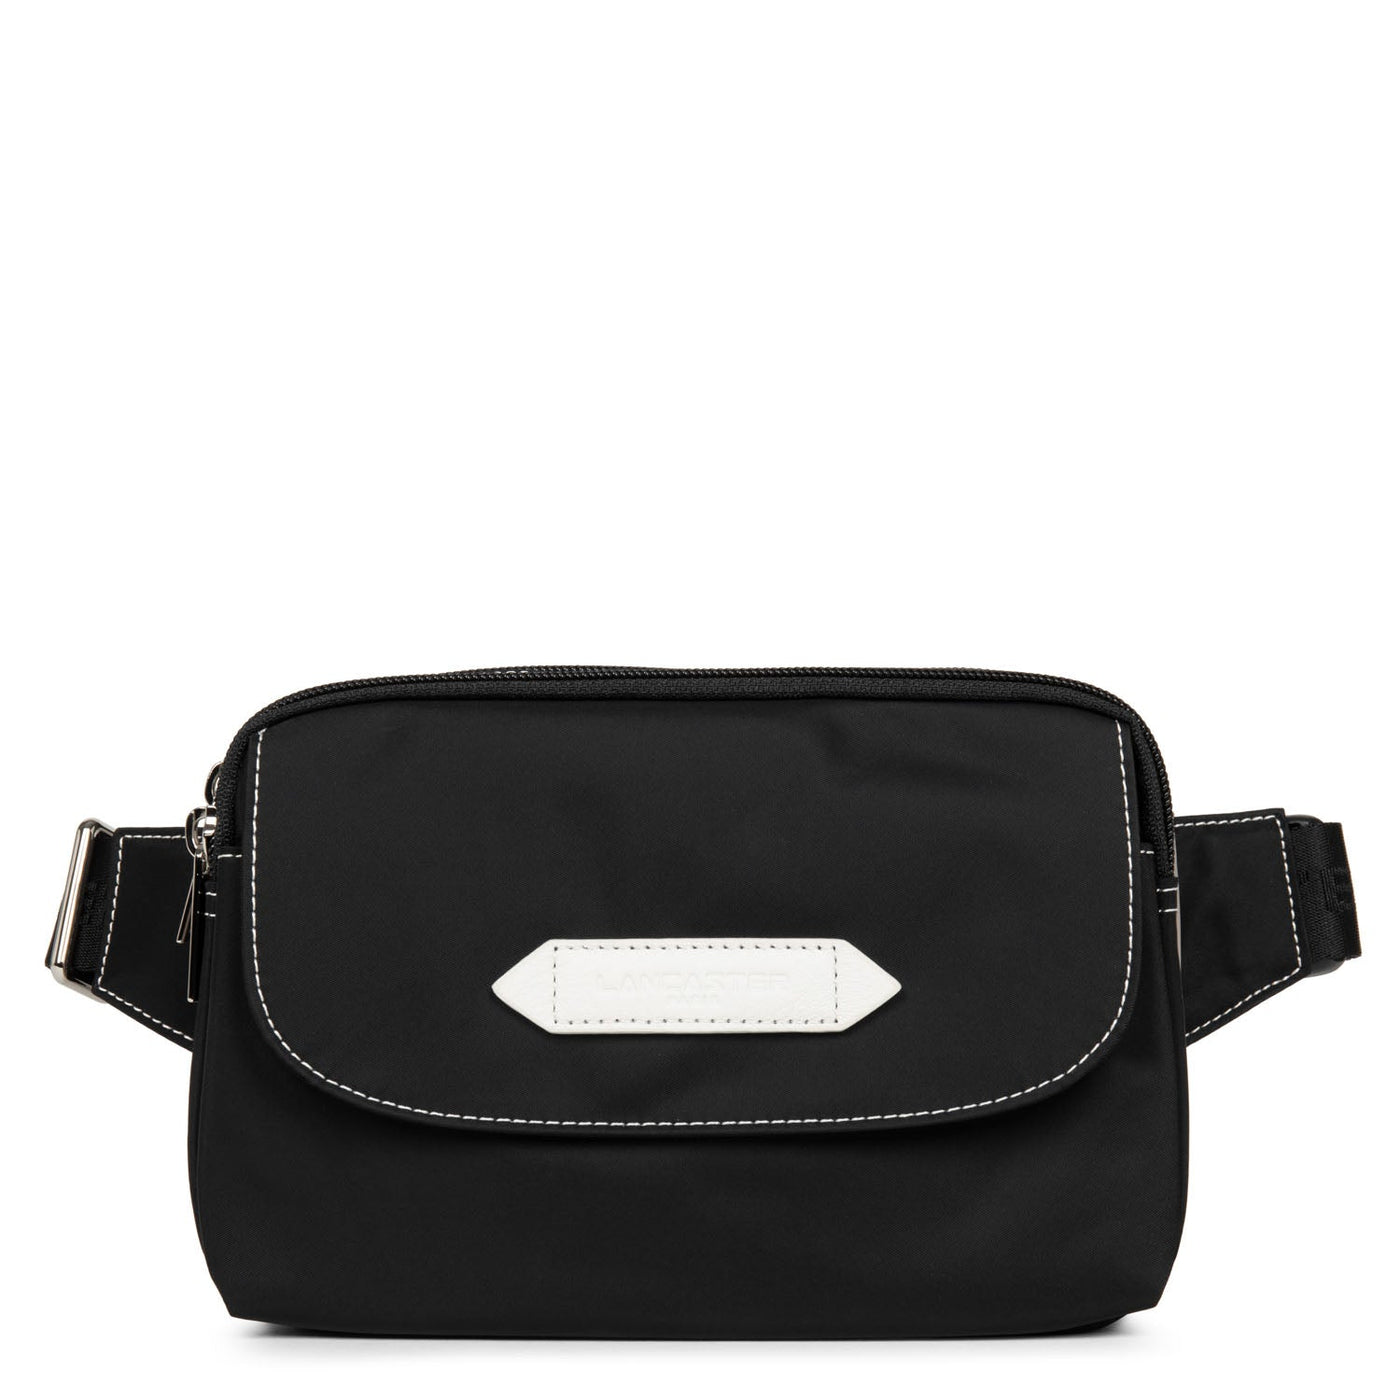 belt bag - basic sport #couleur_noir-galet